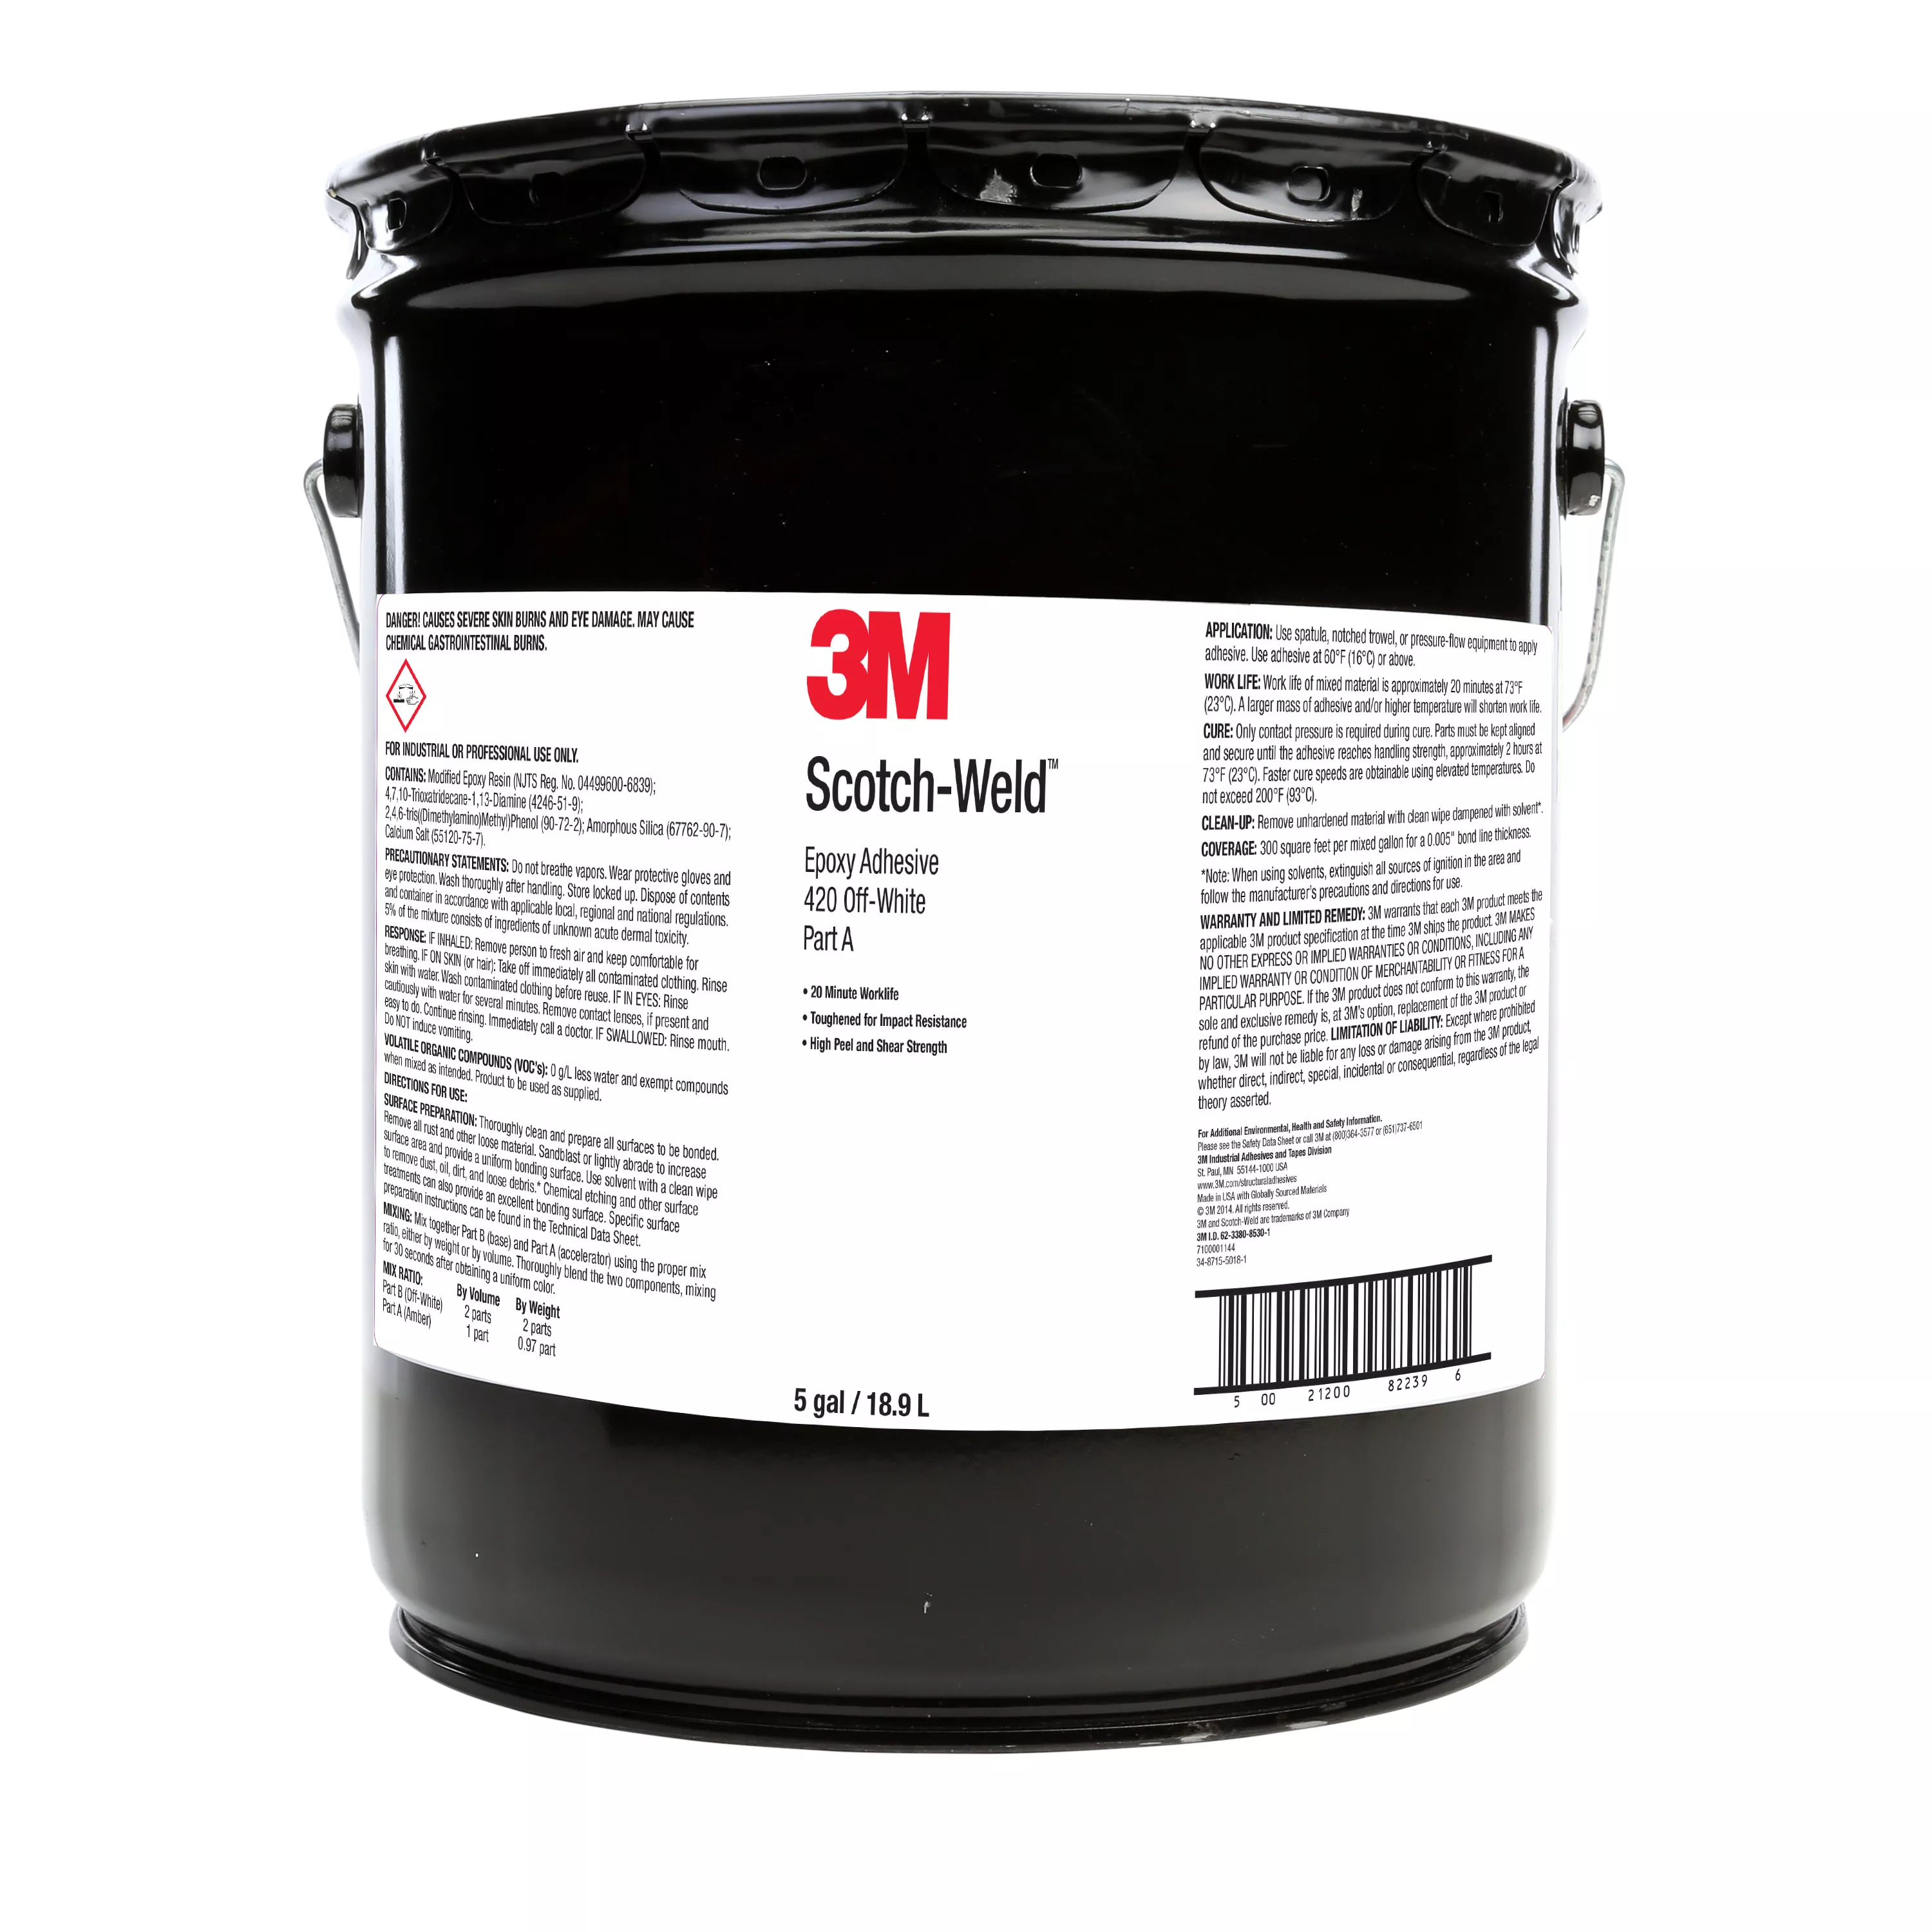 3M™ Scotch-Weld™ Epoxy Adhesive 420, Off-White, Part A, 5 Gallon(Pail),
1 Each/Drum